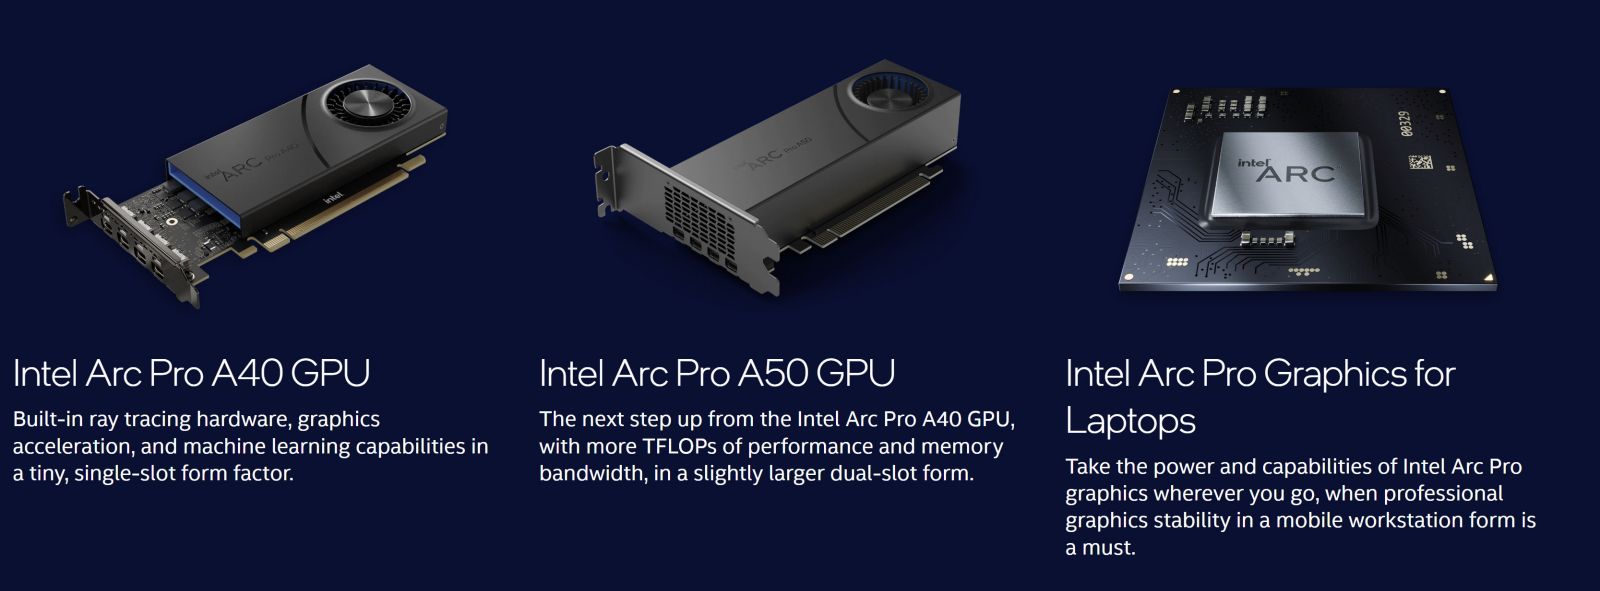 Intel-ARC-PRO-GPUS.jpg